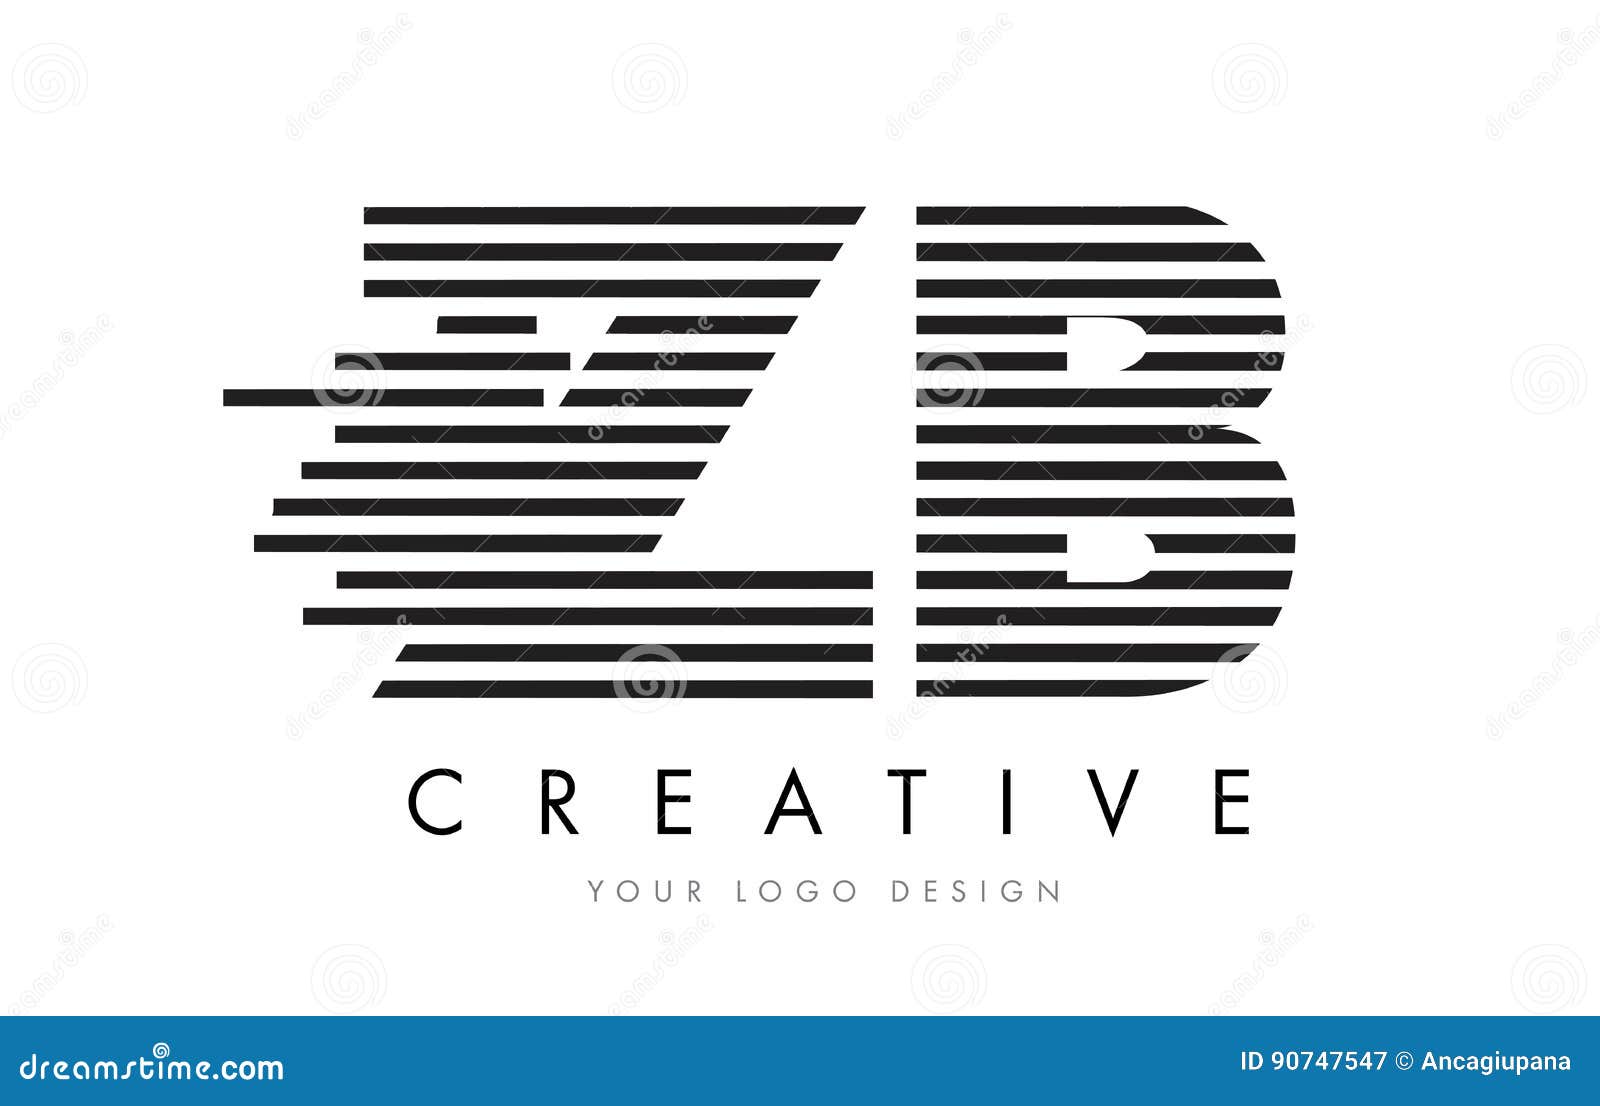 zb z b zebra letter logo  with black and white stripes